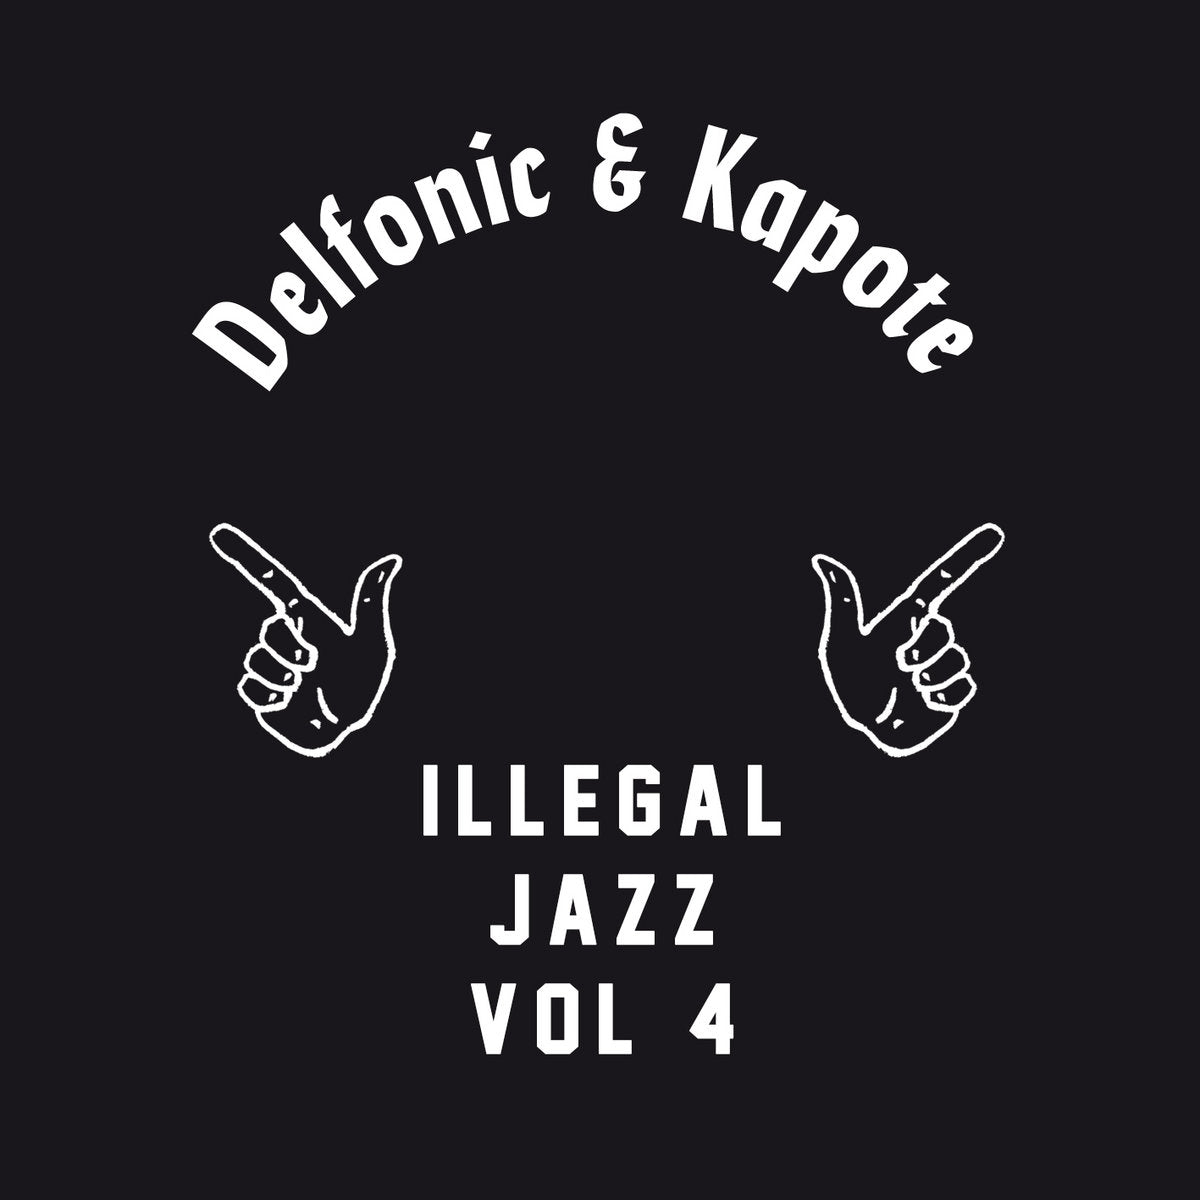 Delfonic & Kapote - Illegal Jazz Vol. 4 (12" Vinyl)